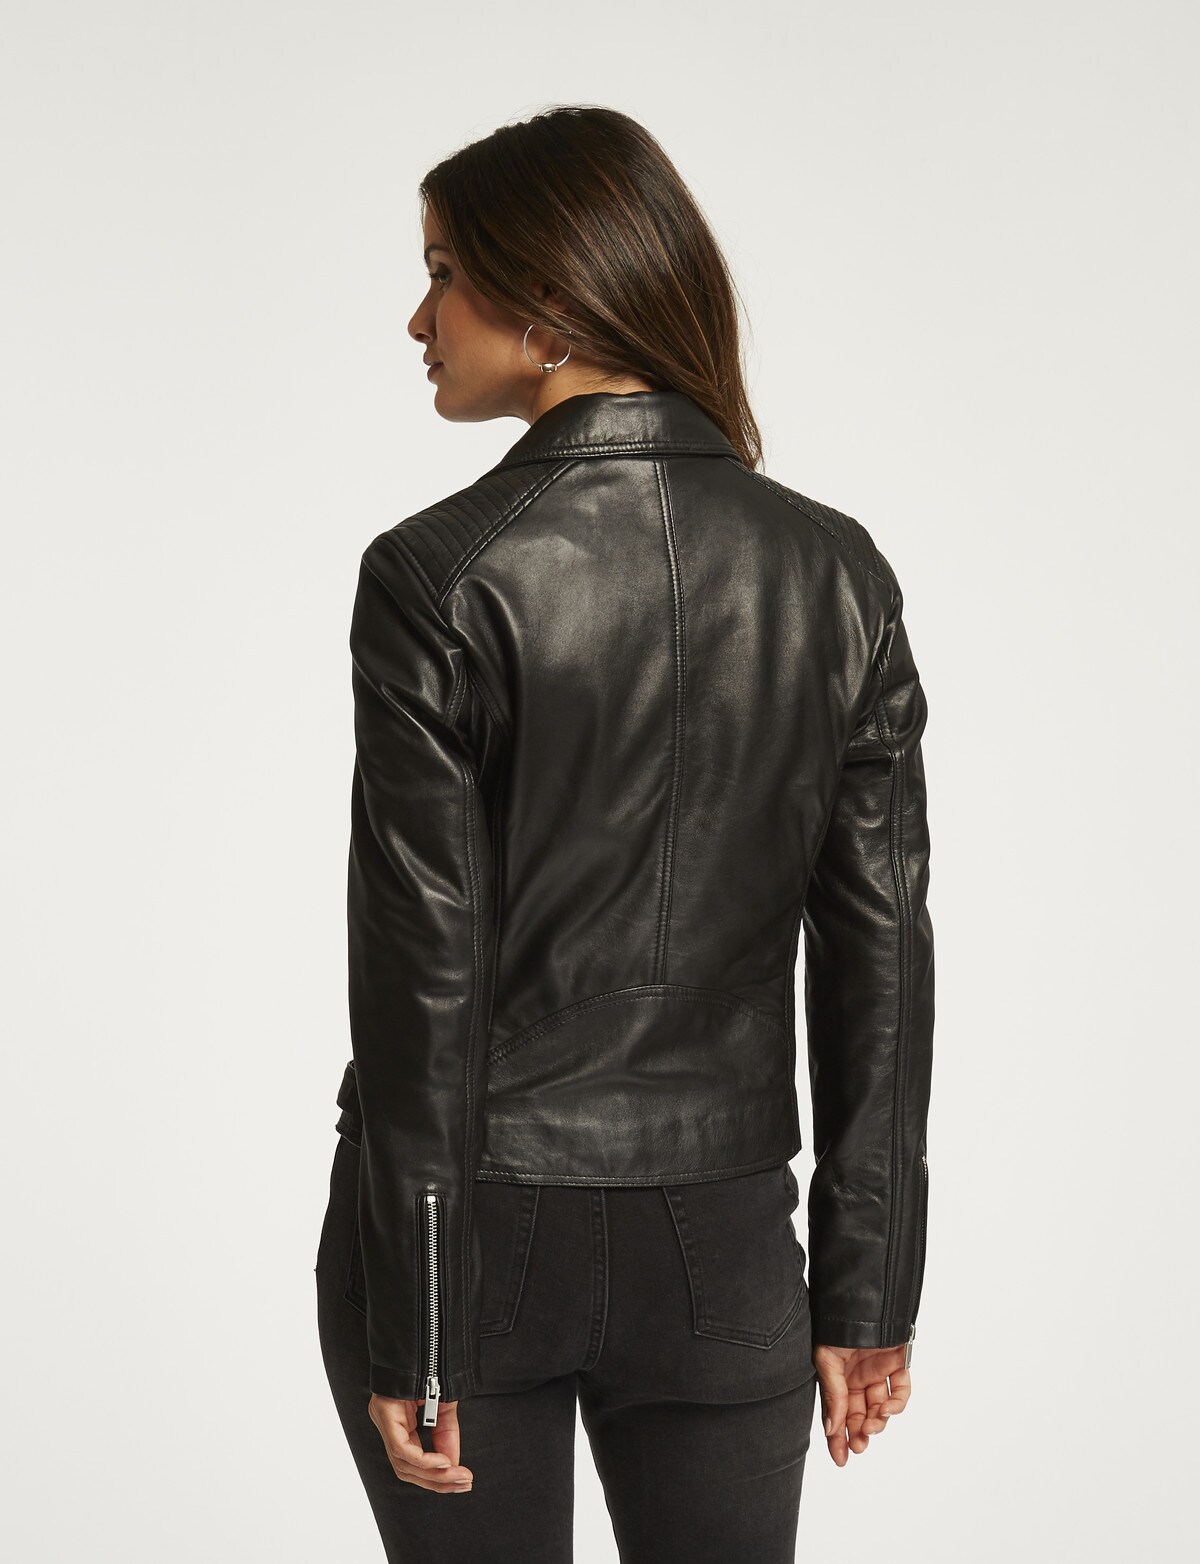 discount 88% WOMEN FASHION Jackets Embroidery Black L Xhilaration jacket 